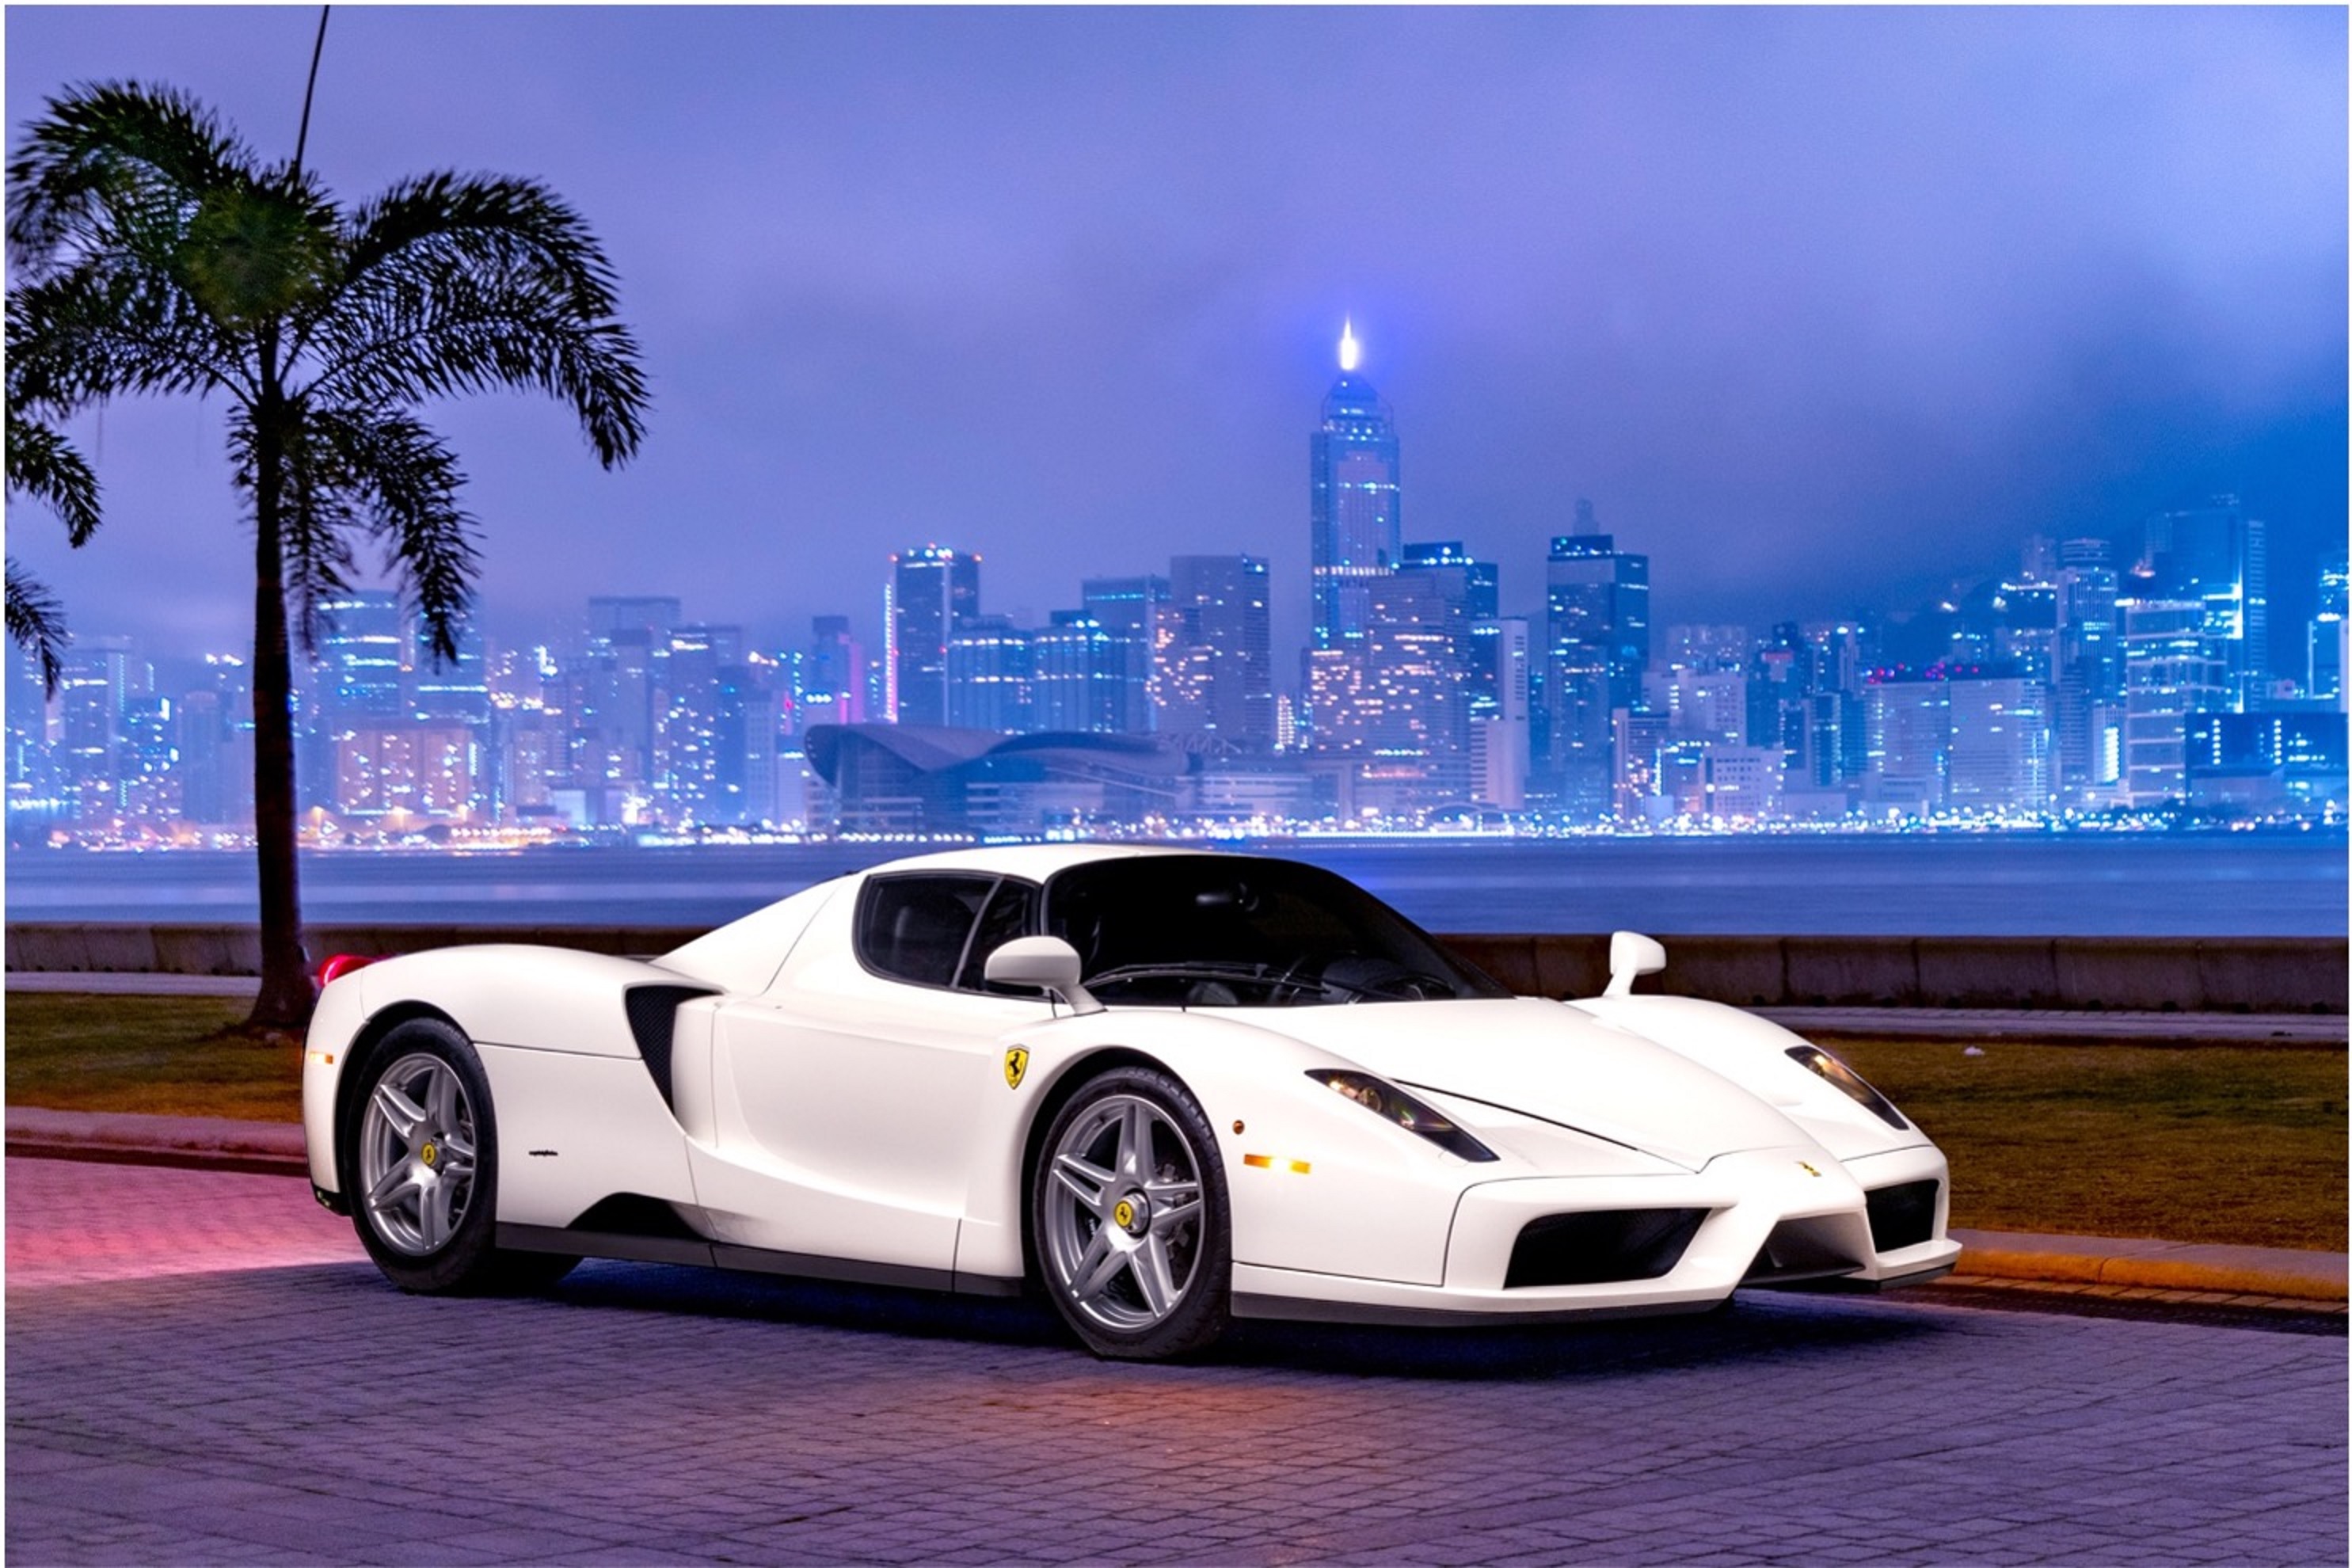 The 1-of-1 Bianco Avus white 2003 Ferrari Enzo in front of a nighttime city skyline